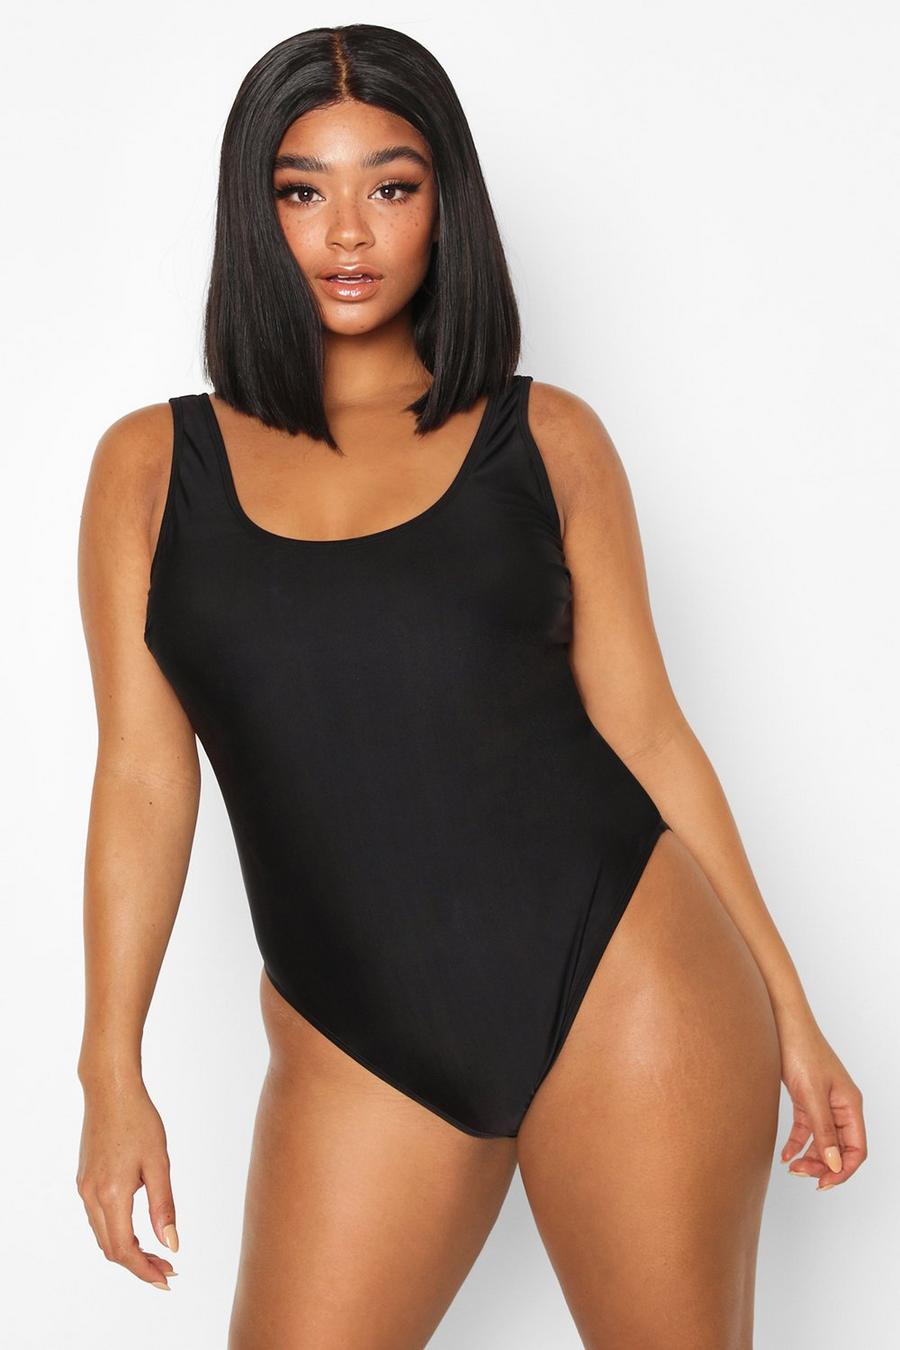 https://media.boohoo.com/i/boohoo/pzz10474_black_xl/female-black-plus-scoop-back-swimsuit/?w=900&qlt=default&fmt.jp2.qlt=70&fmt=auto&sm=fit